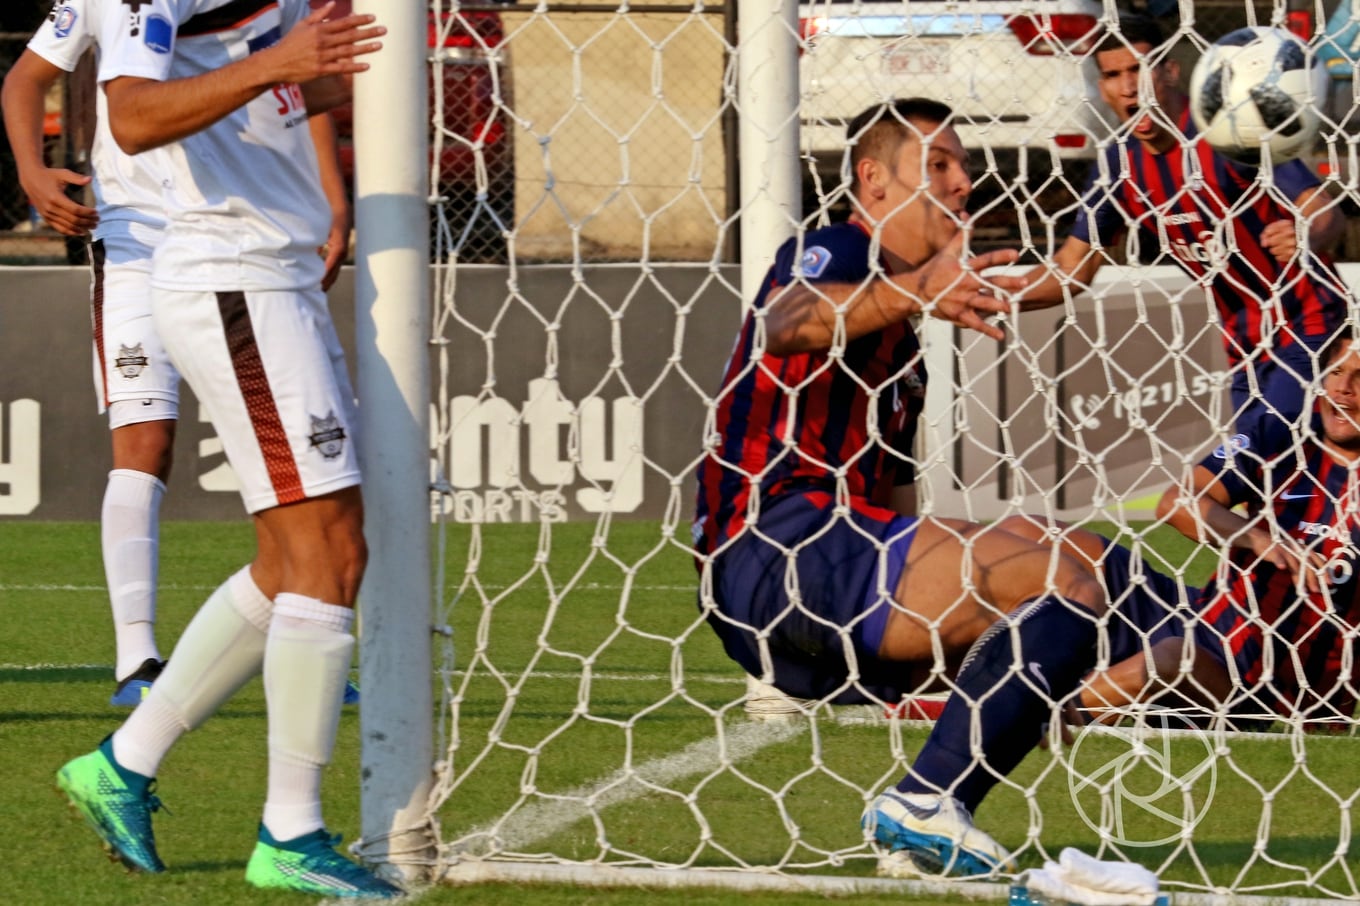 Entre las redes, Churin anota uno de sus goles. Foto Nestor Soto